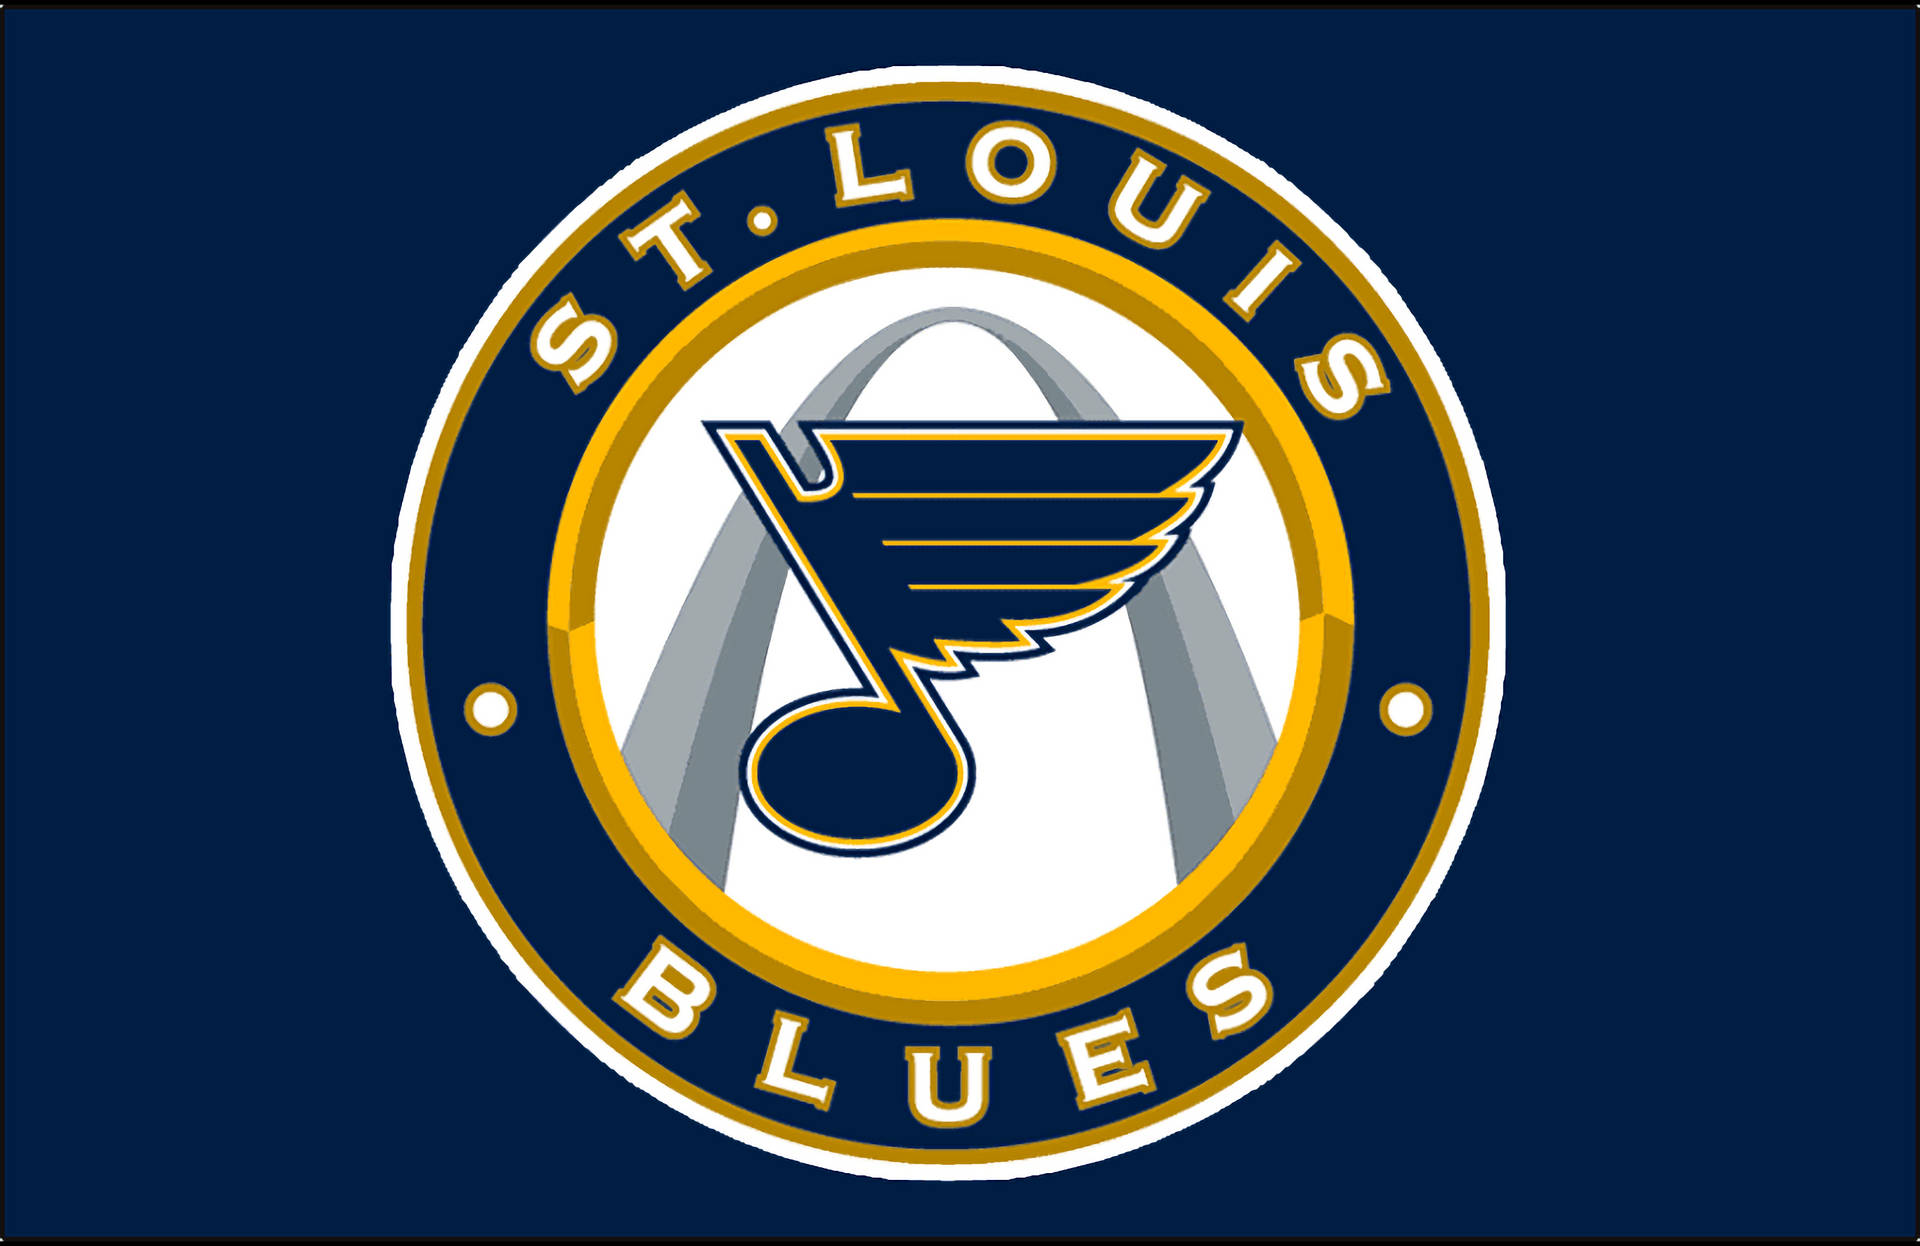 Stlouis Blues Kreisförmiges Logo Wallpaper